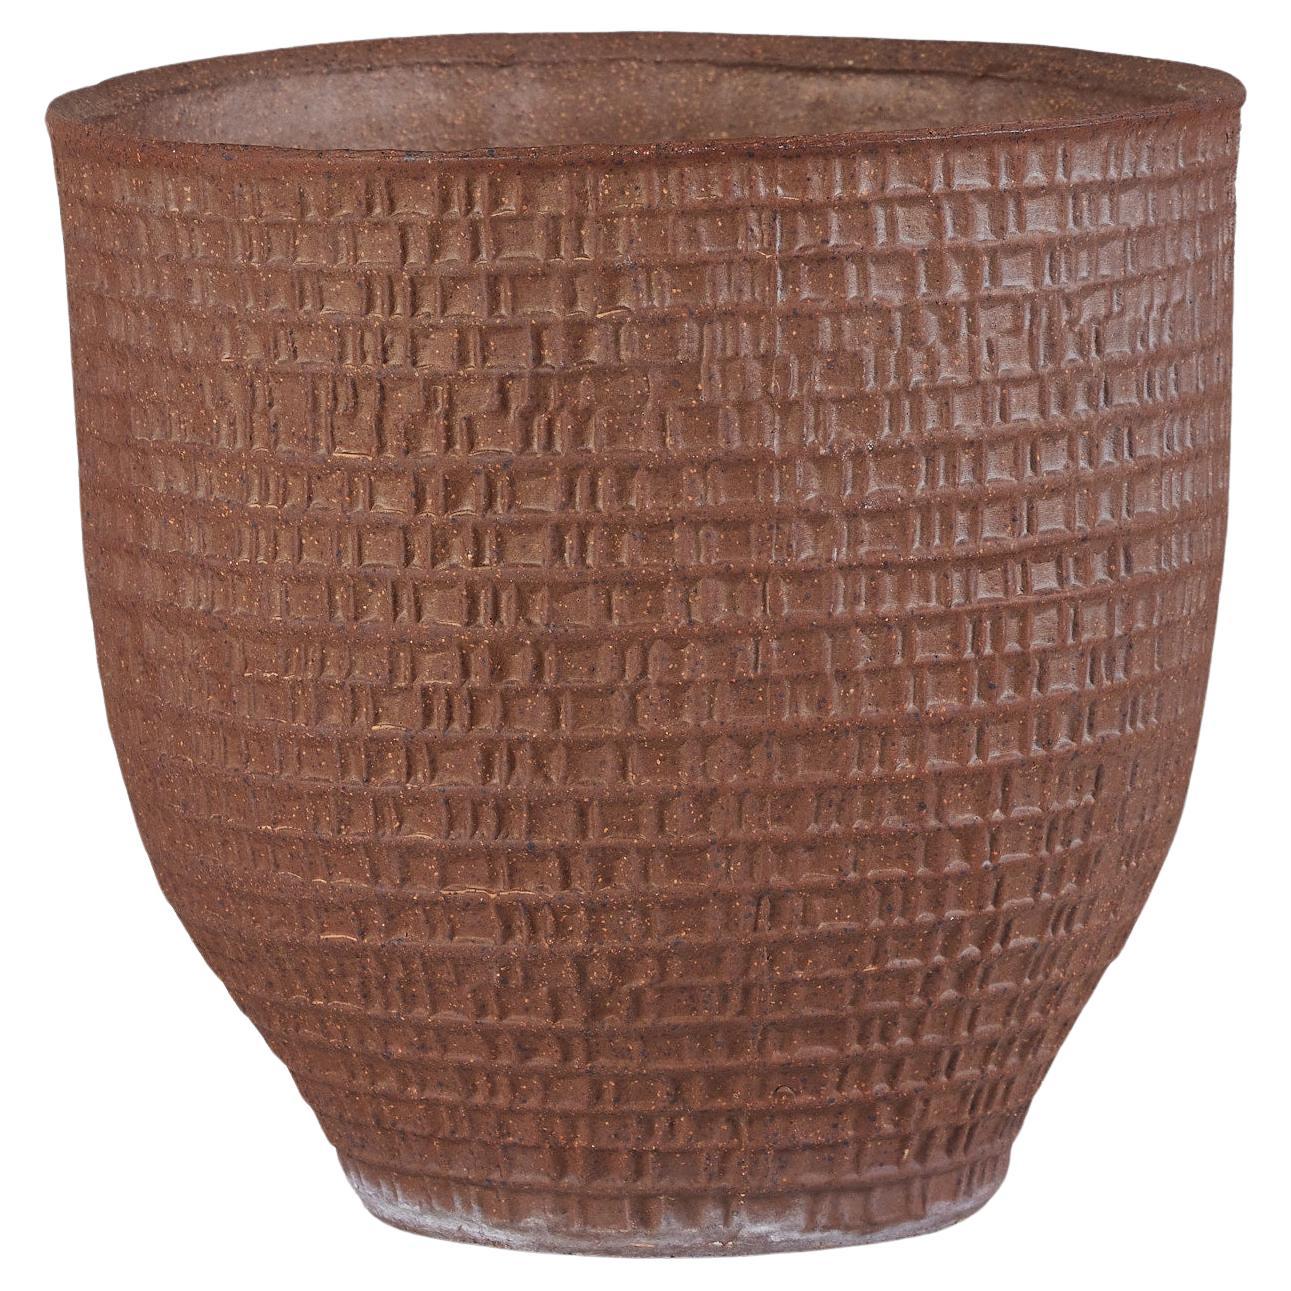 David Cressey "Rectangle" Stoneware Pro/Artisan Planter for Architectural Potter